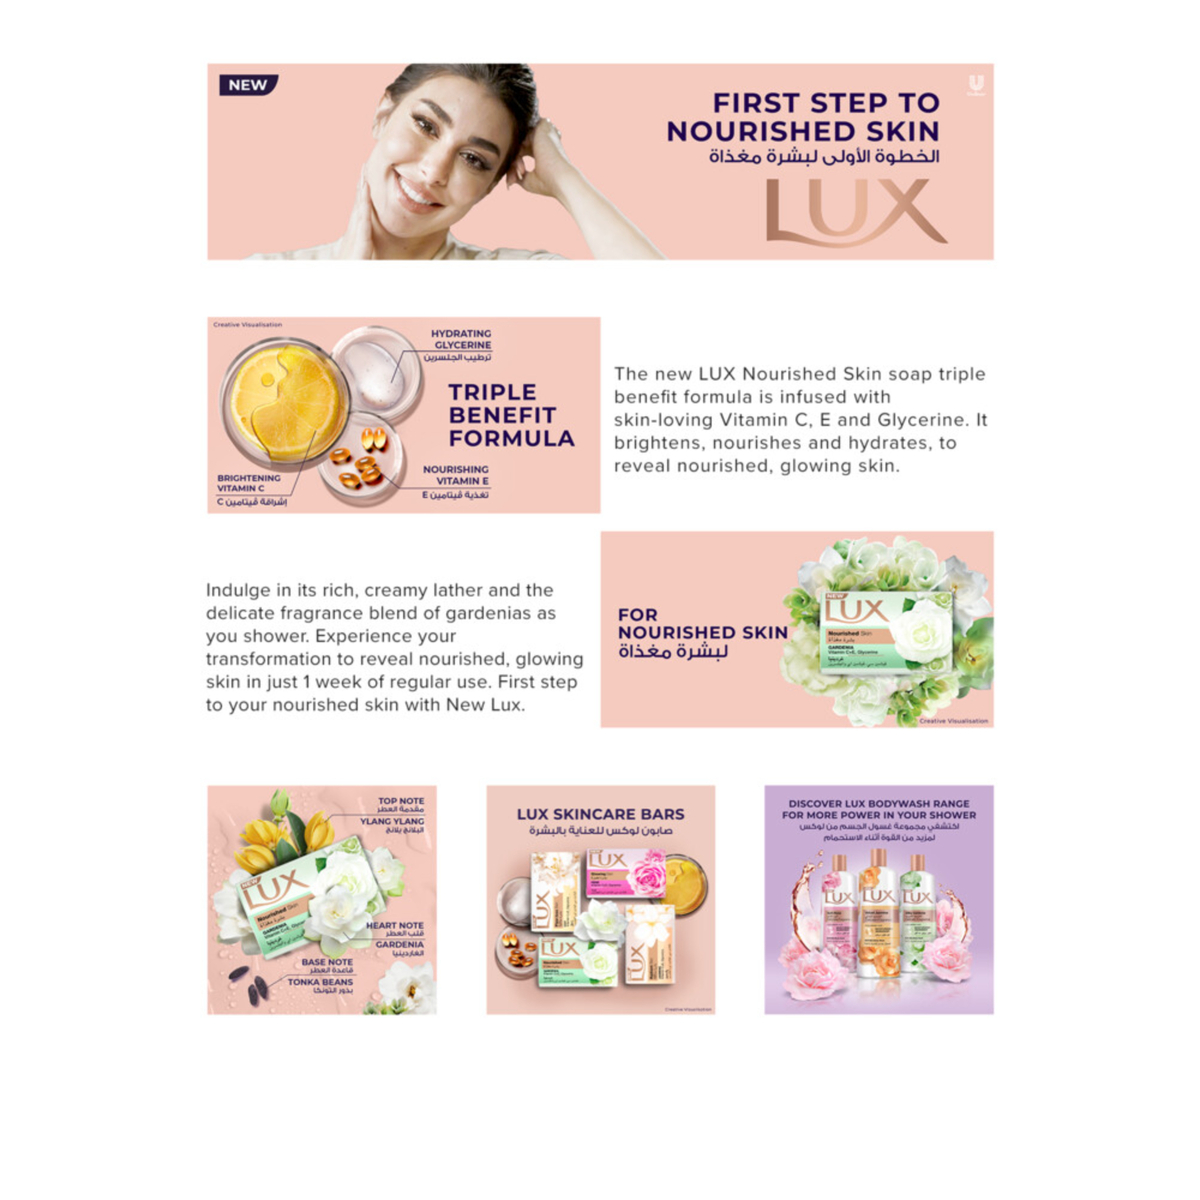 Lux Nourished Skin Gardenia Bar Soap 120 g